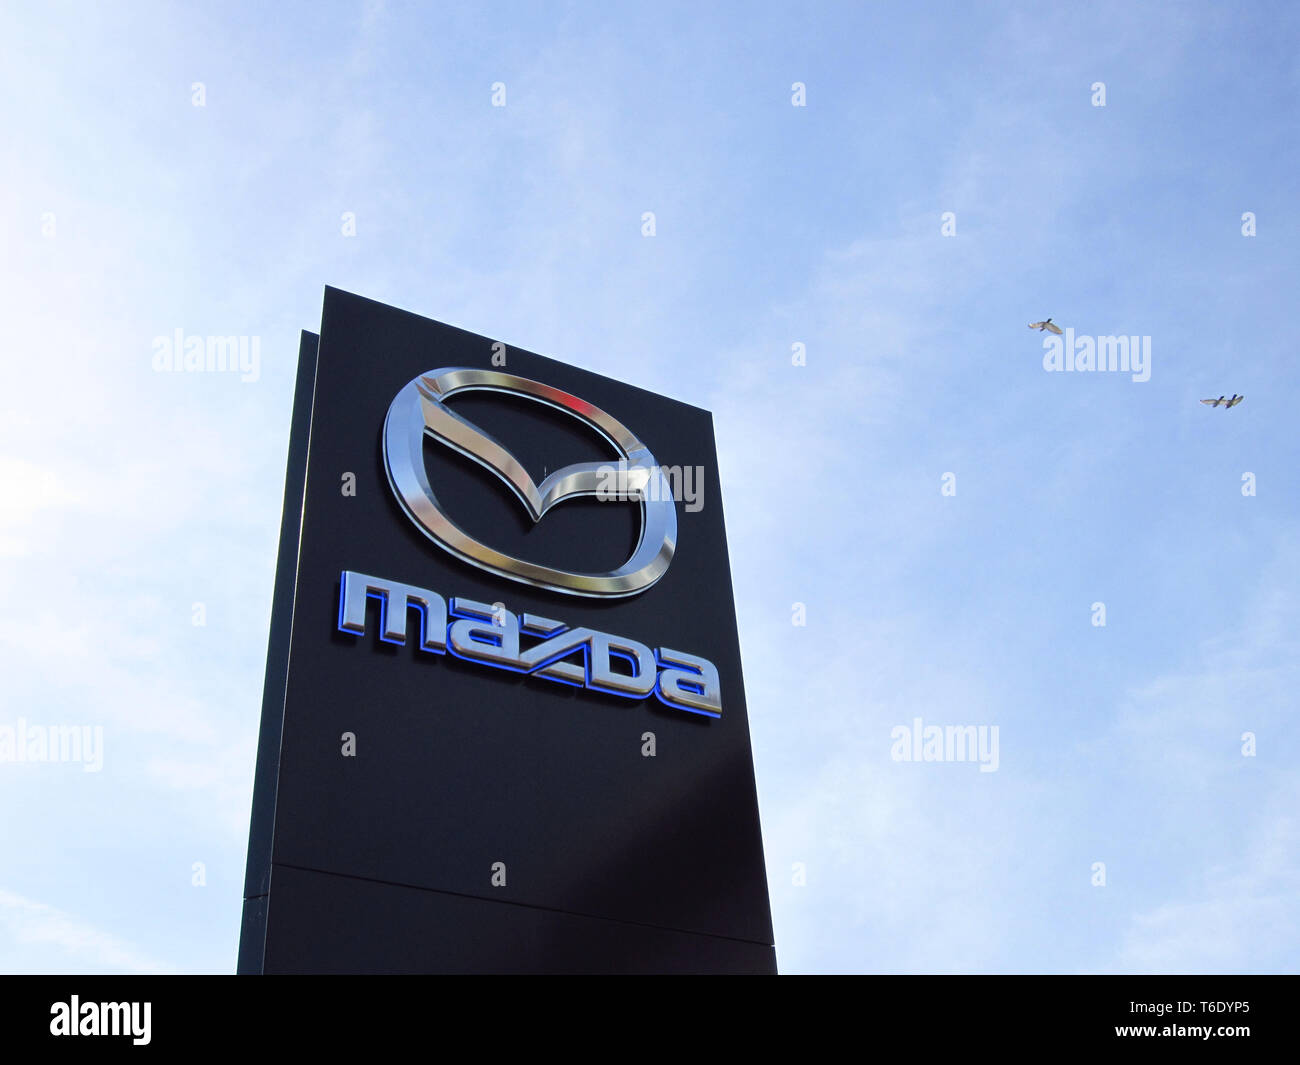 LJUBLJANA, SLOVENIA - MARCH 22 2019: Brand logo at the entrance to Mazda dealership. Mazda is a Japanese multinational car manufacturer. Stock Photo